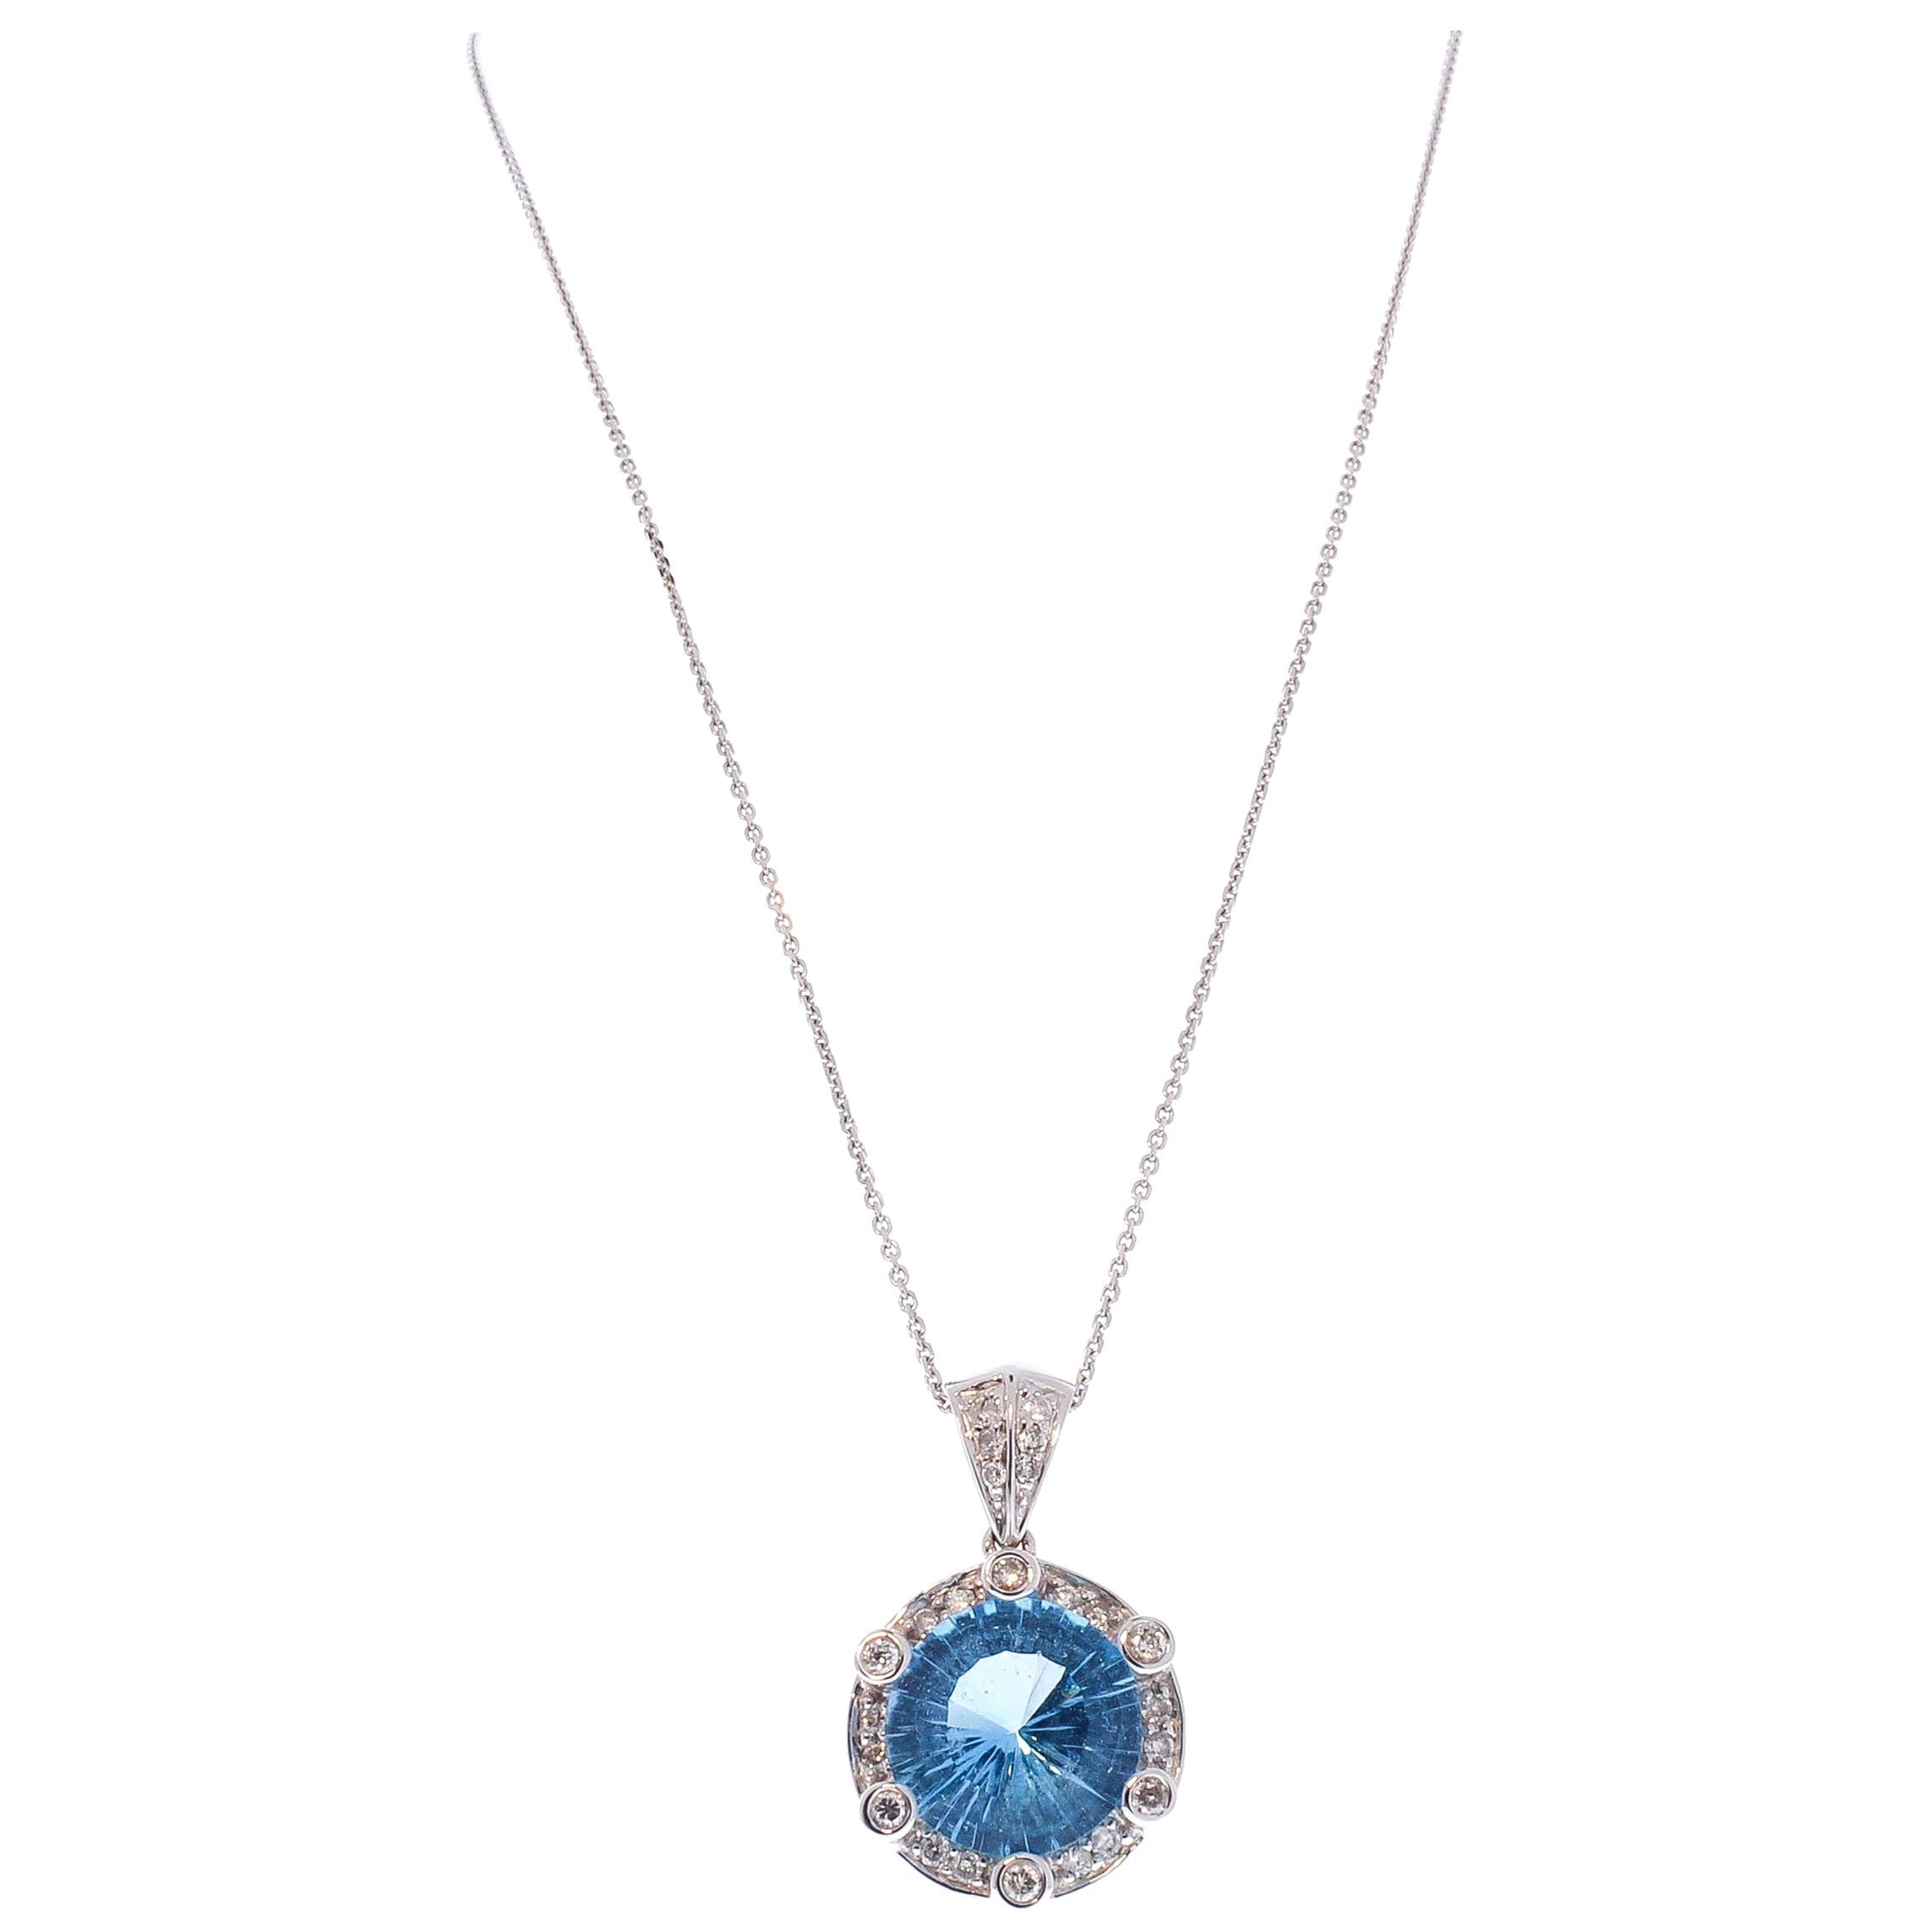 6.05 Carat Swiss Blue Topaz and Diamond Pendant Necklace in 14 Karat White Gold